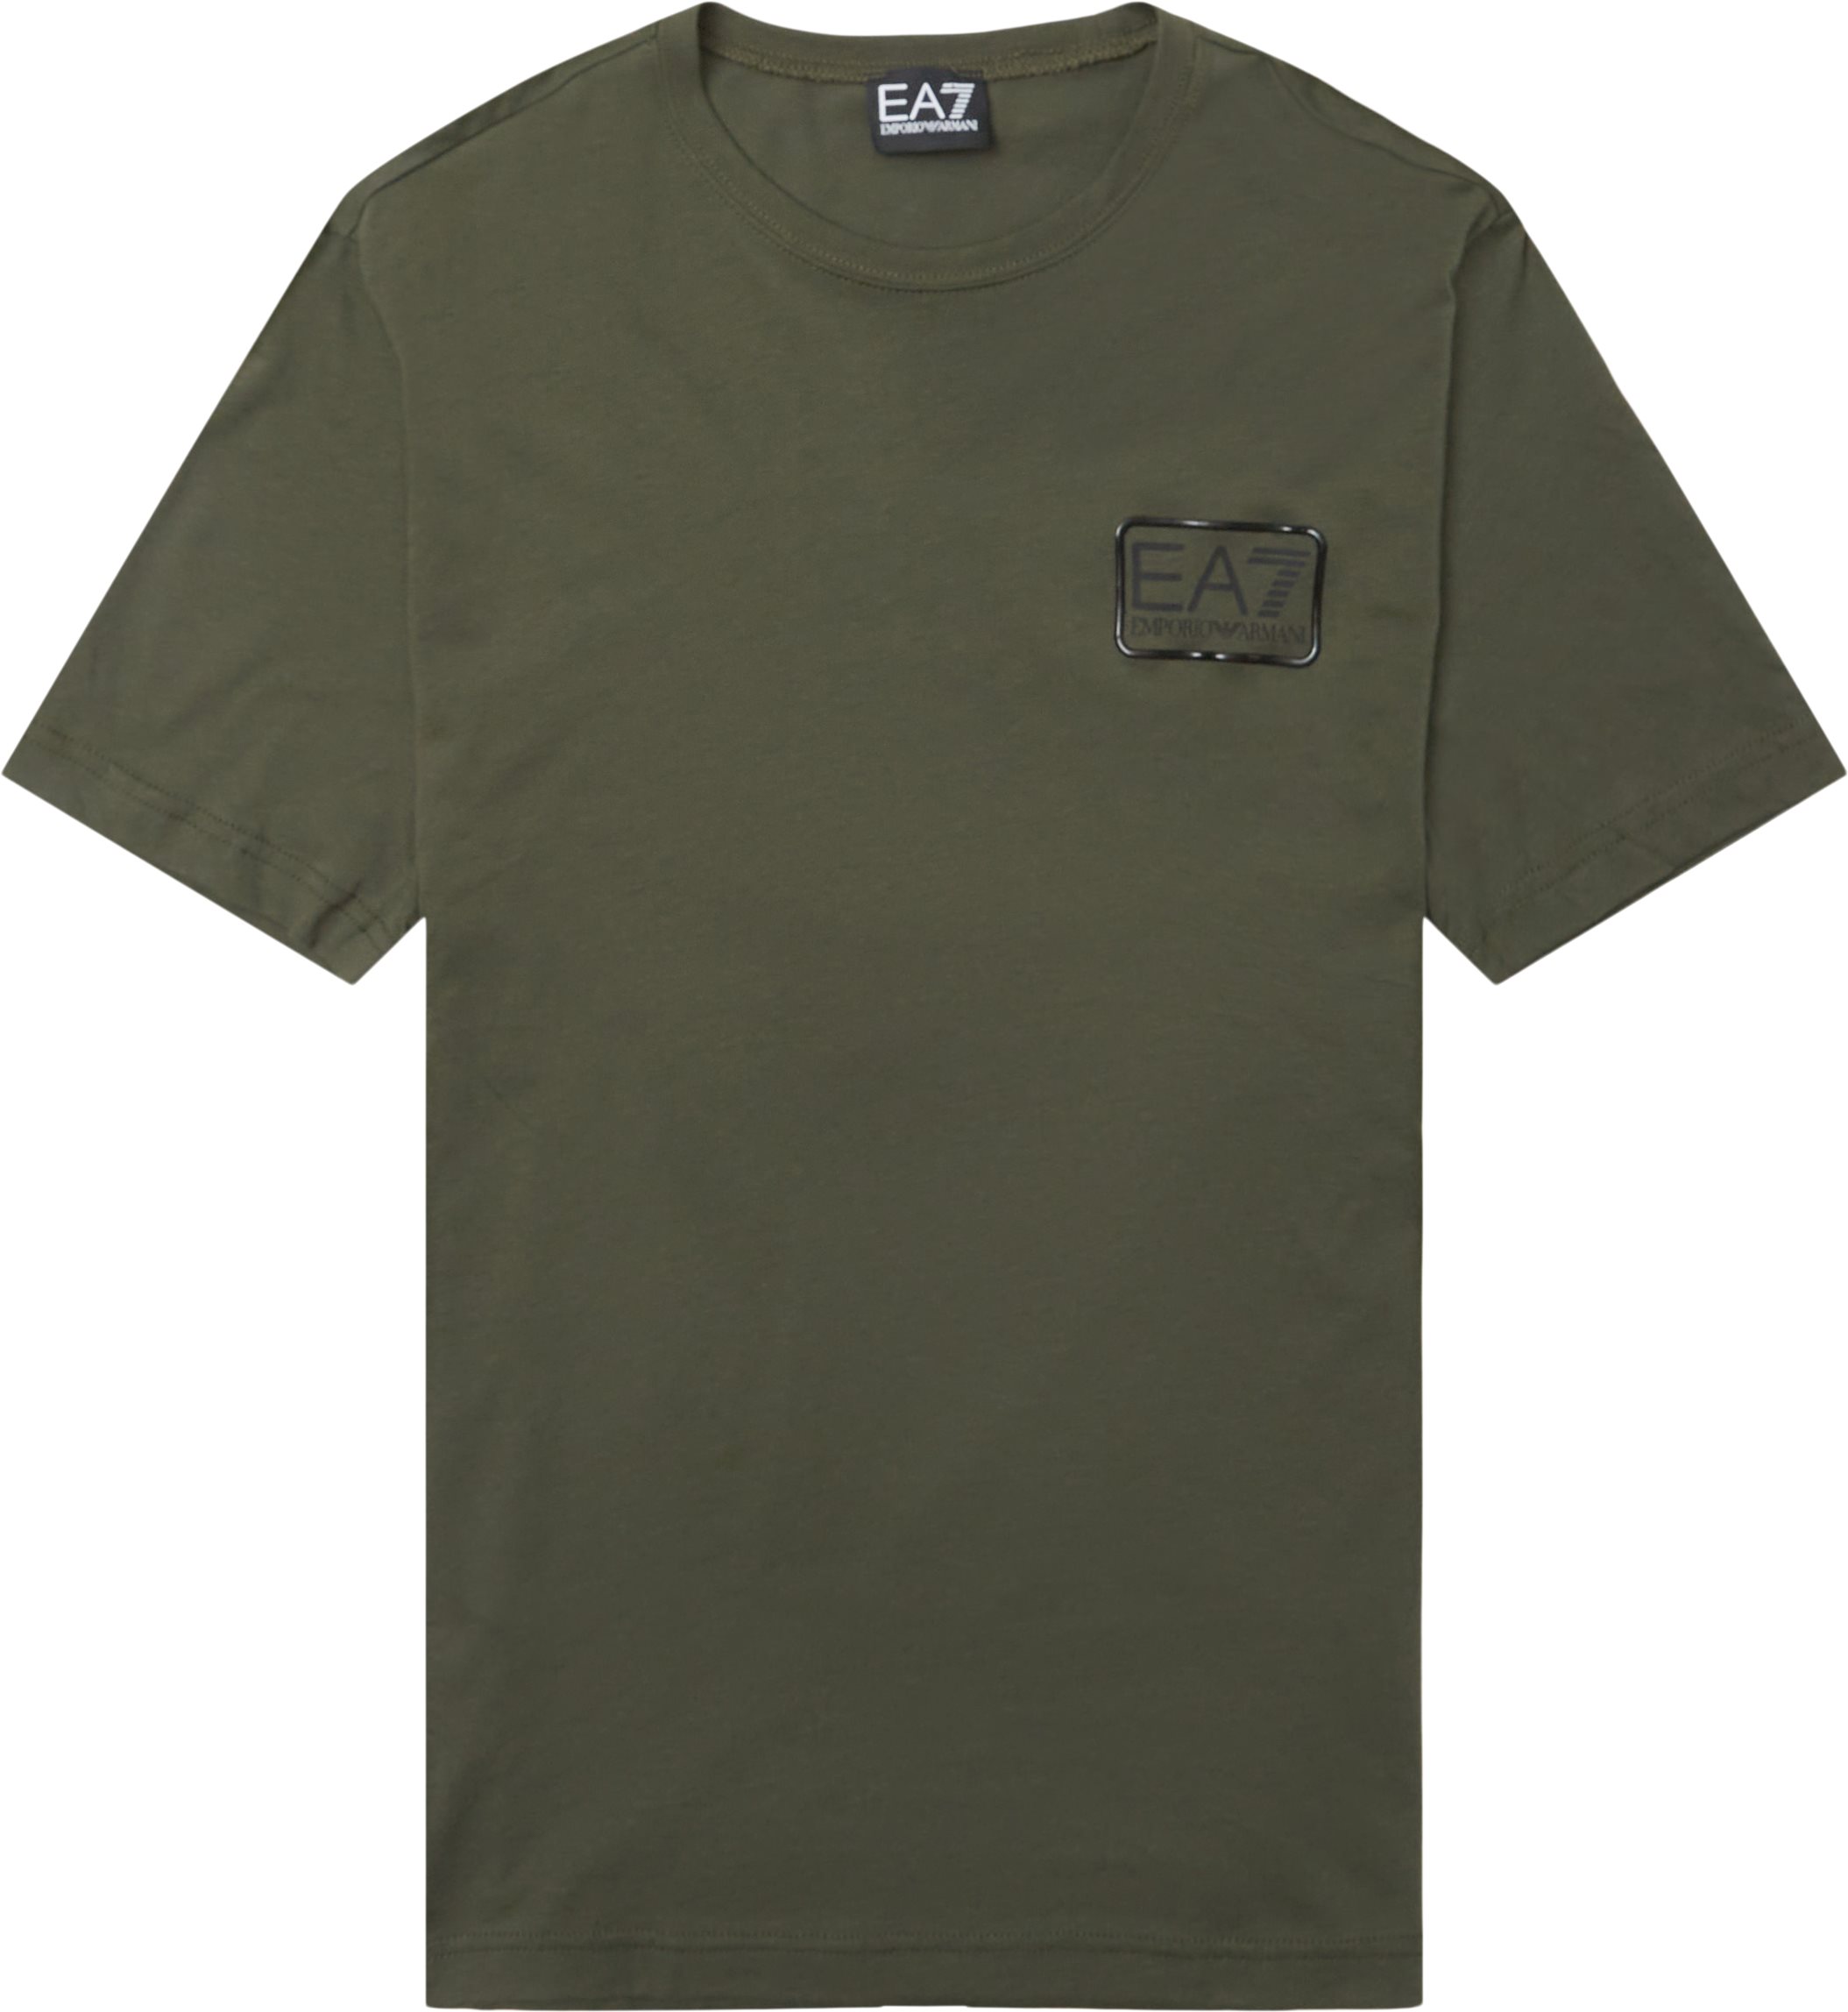 Pjm9z-3lpt05 - T-shirts - Regular fit - Armé